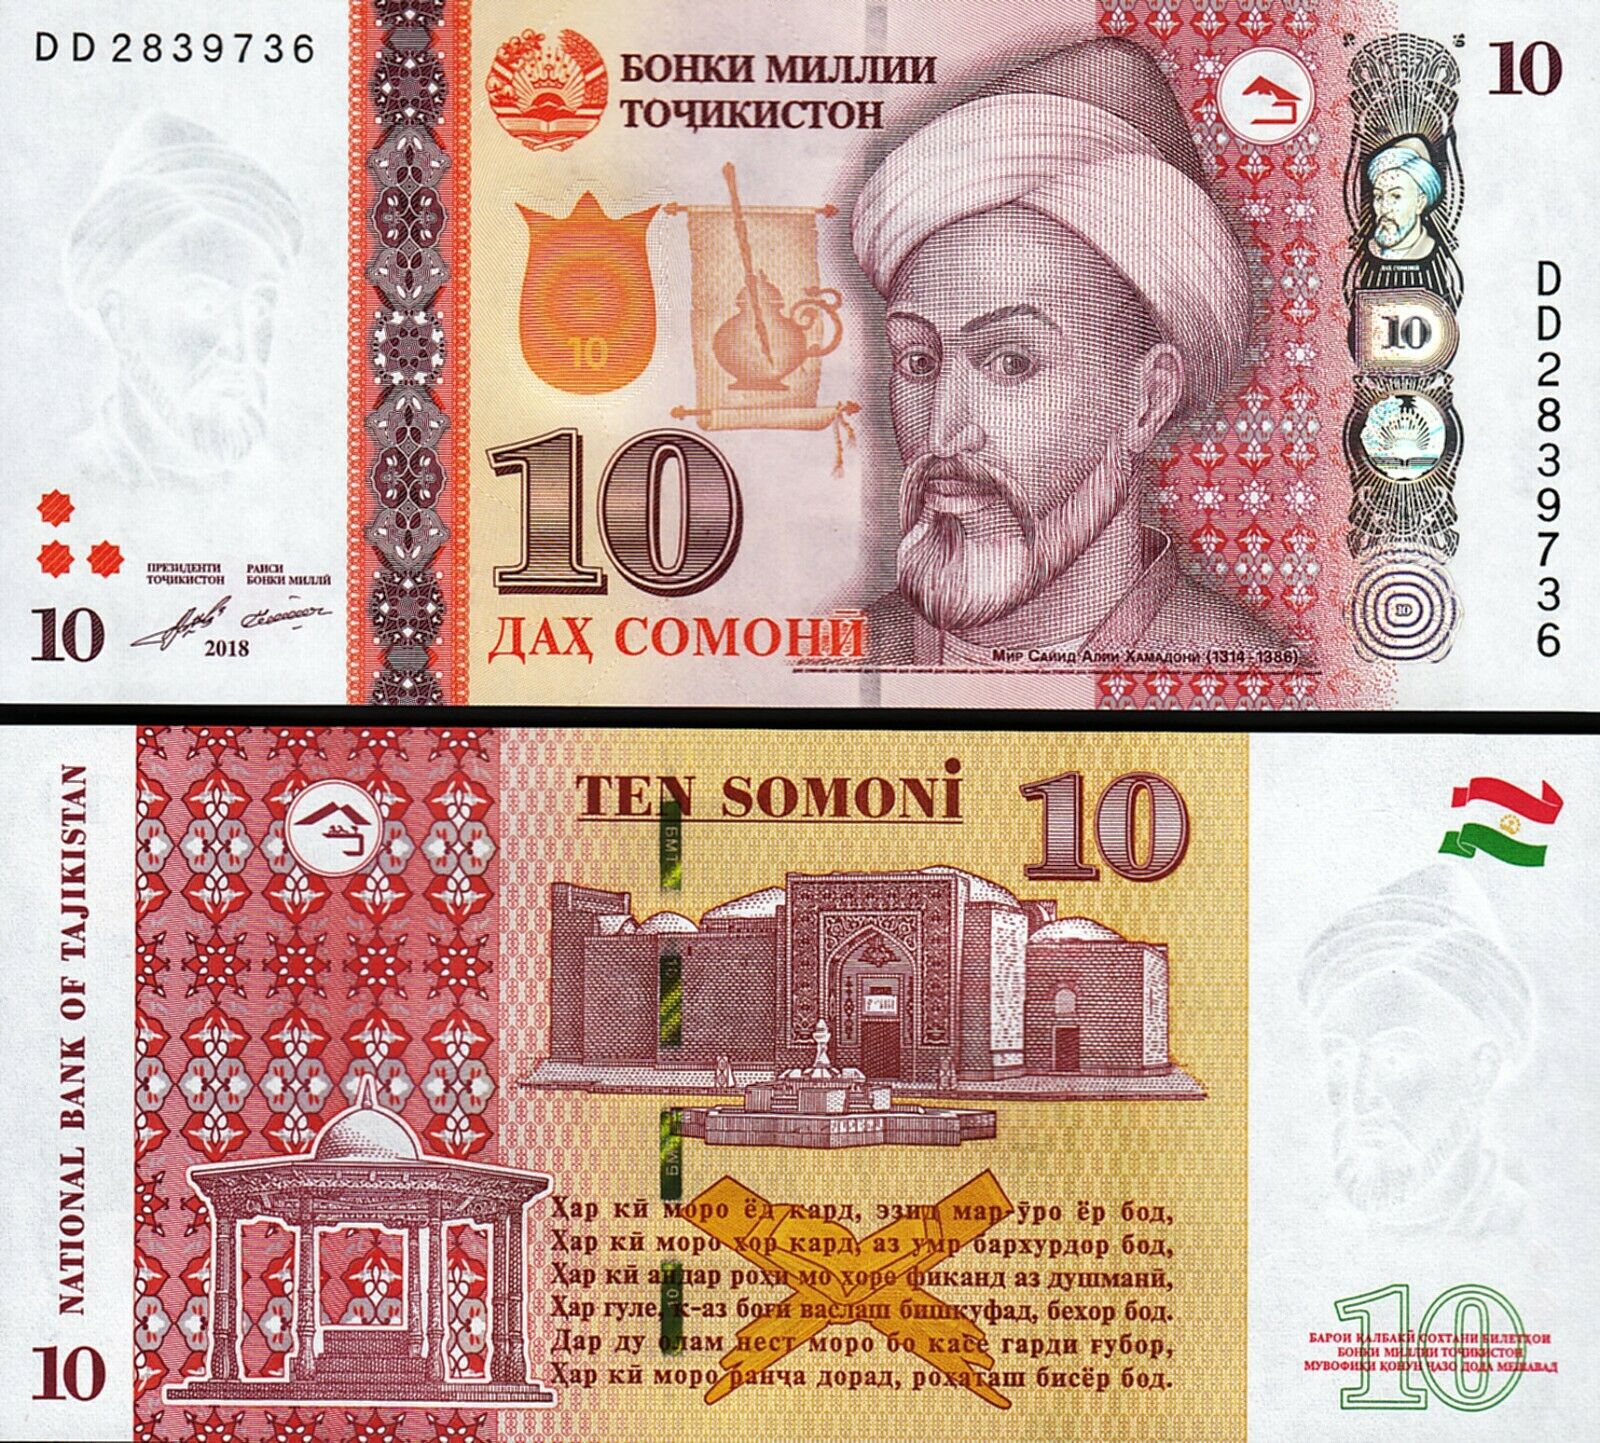 500 сомони таджикистан в рублях. Купюры Таджикистана. Таджикские банкноты. Таджикский Сомони. Купюры Таджикистана 1000 Сомони.